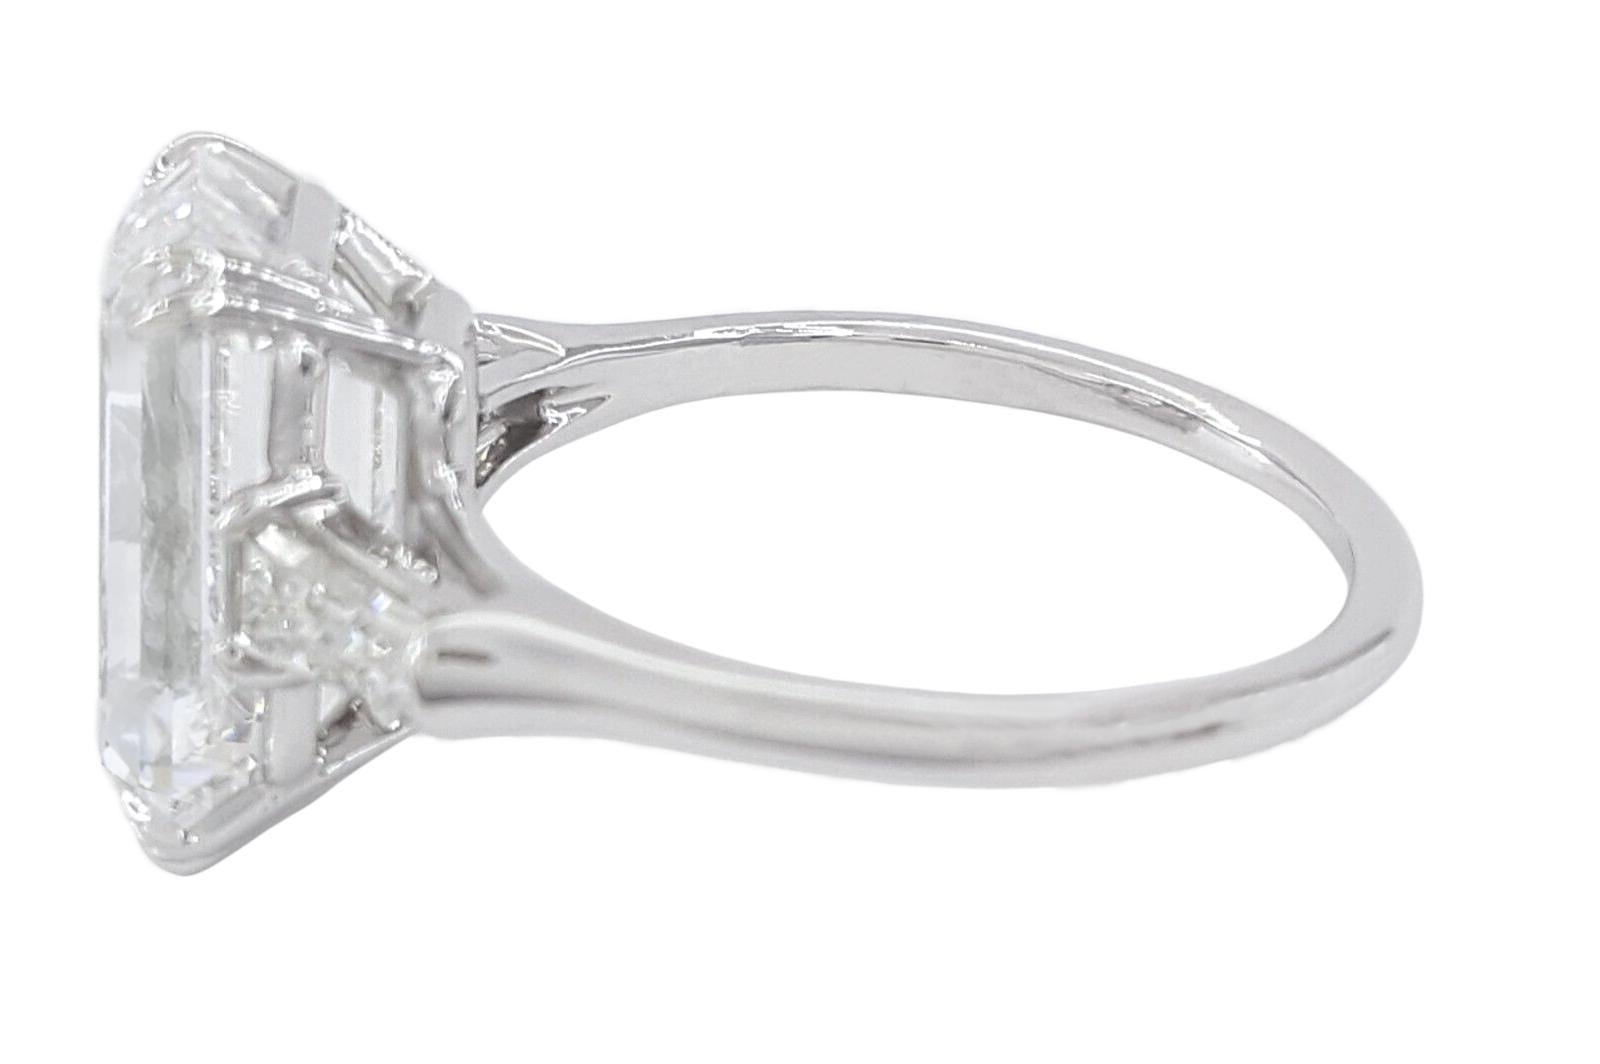 Modern Harry Winston 4.75 Carat GIA Certified D Color Emerald Cut Diamond Ring For Sale